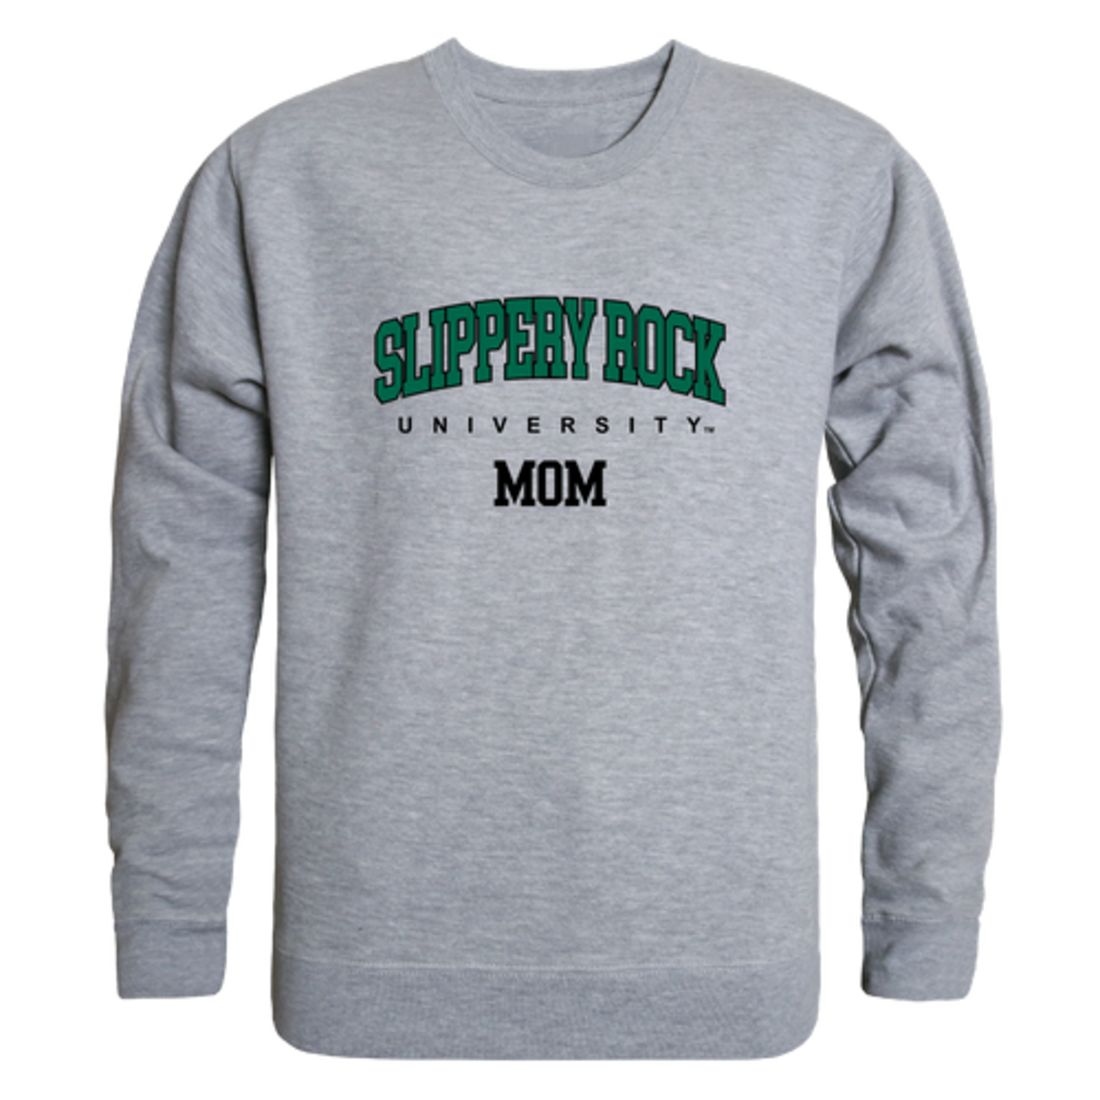 Slippery Rock The Rock Mom Crewneck Sweatshirt